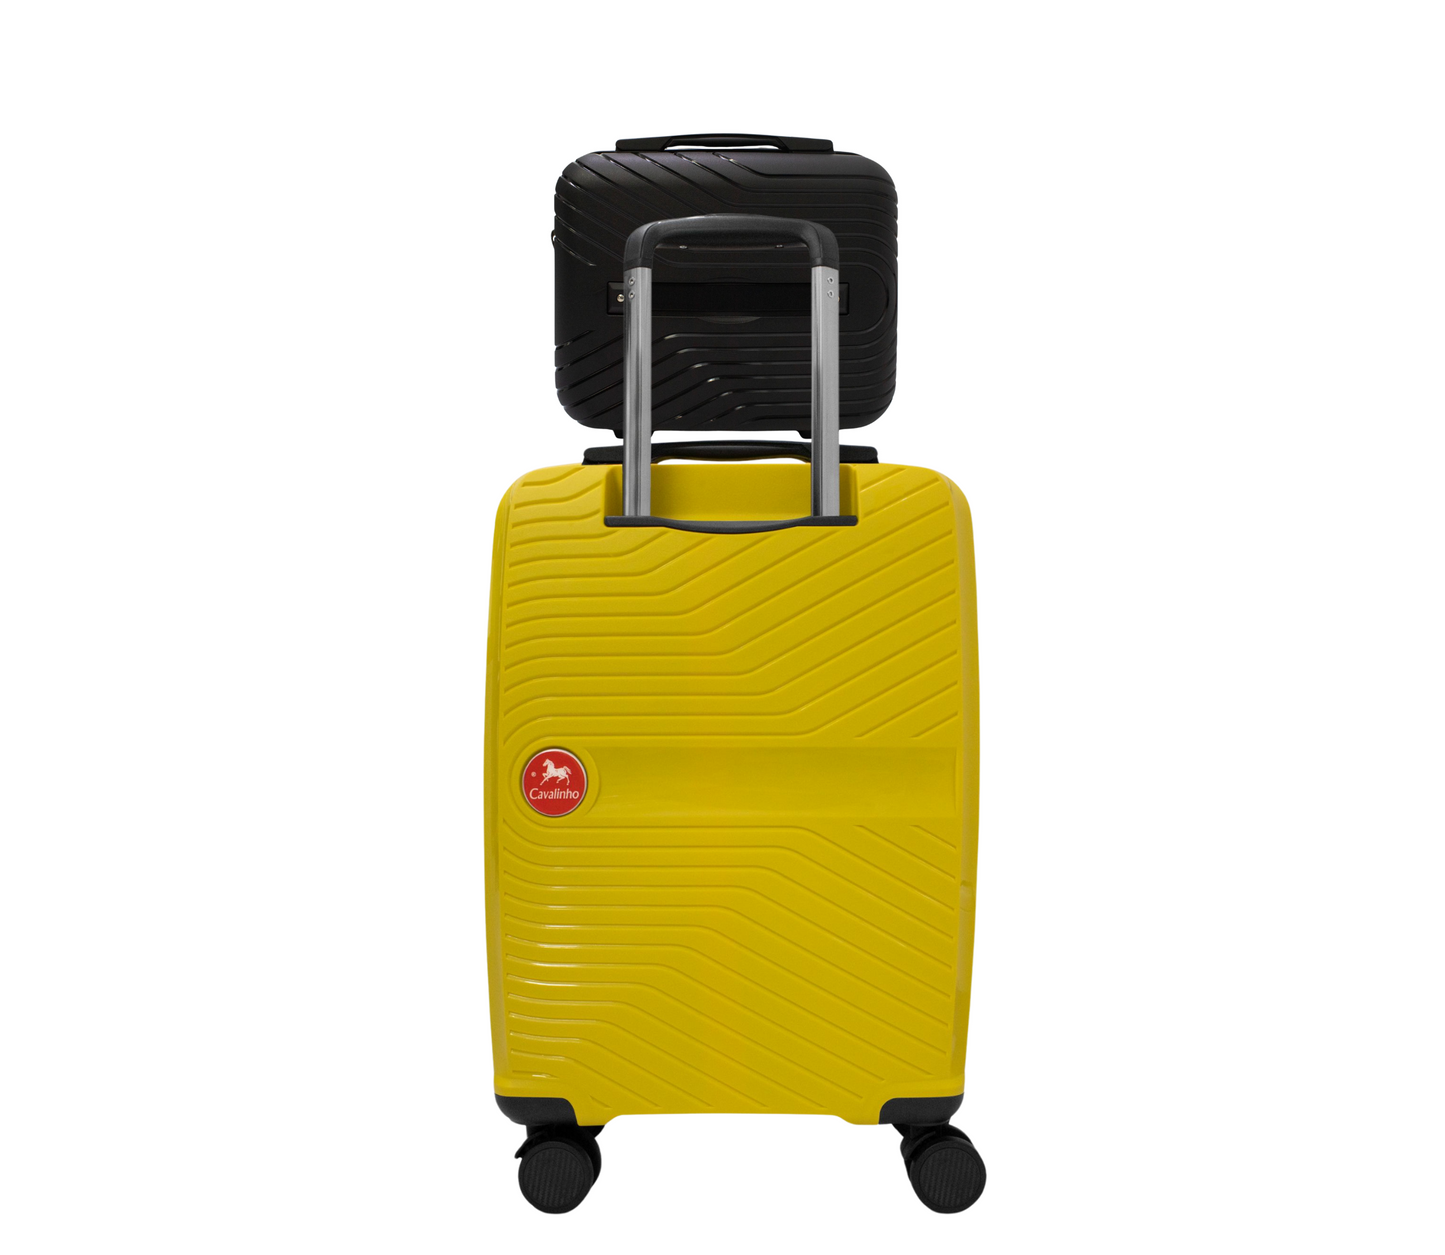 Cavalinho Canada & USA Colorful 2 Piece Luggage Set (15" & 19") - Black Yellow - 68020004.0108.S1519._2